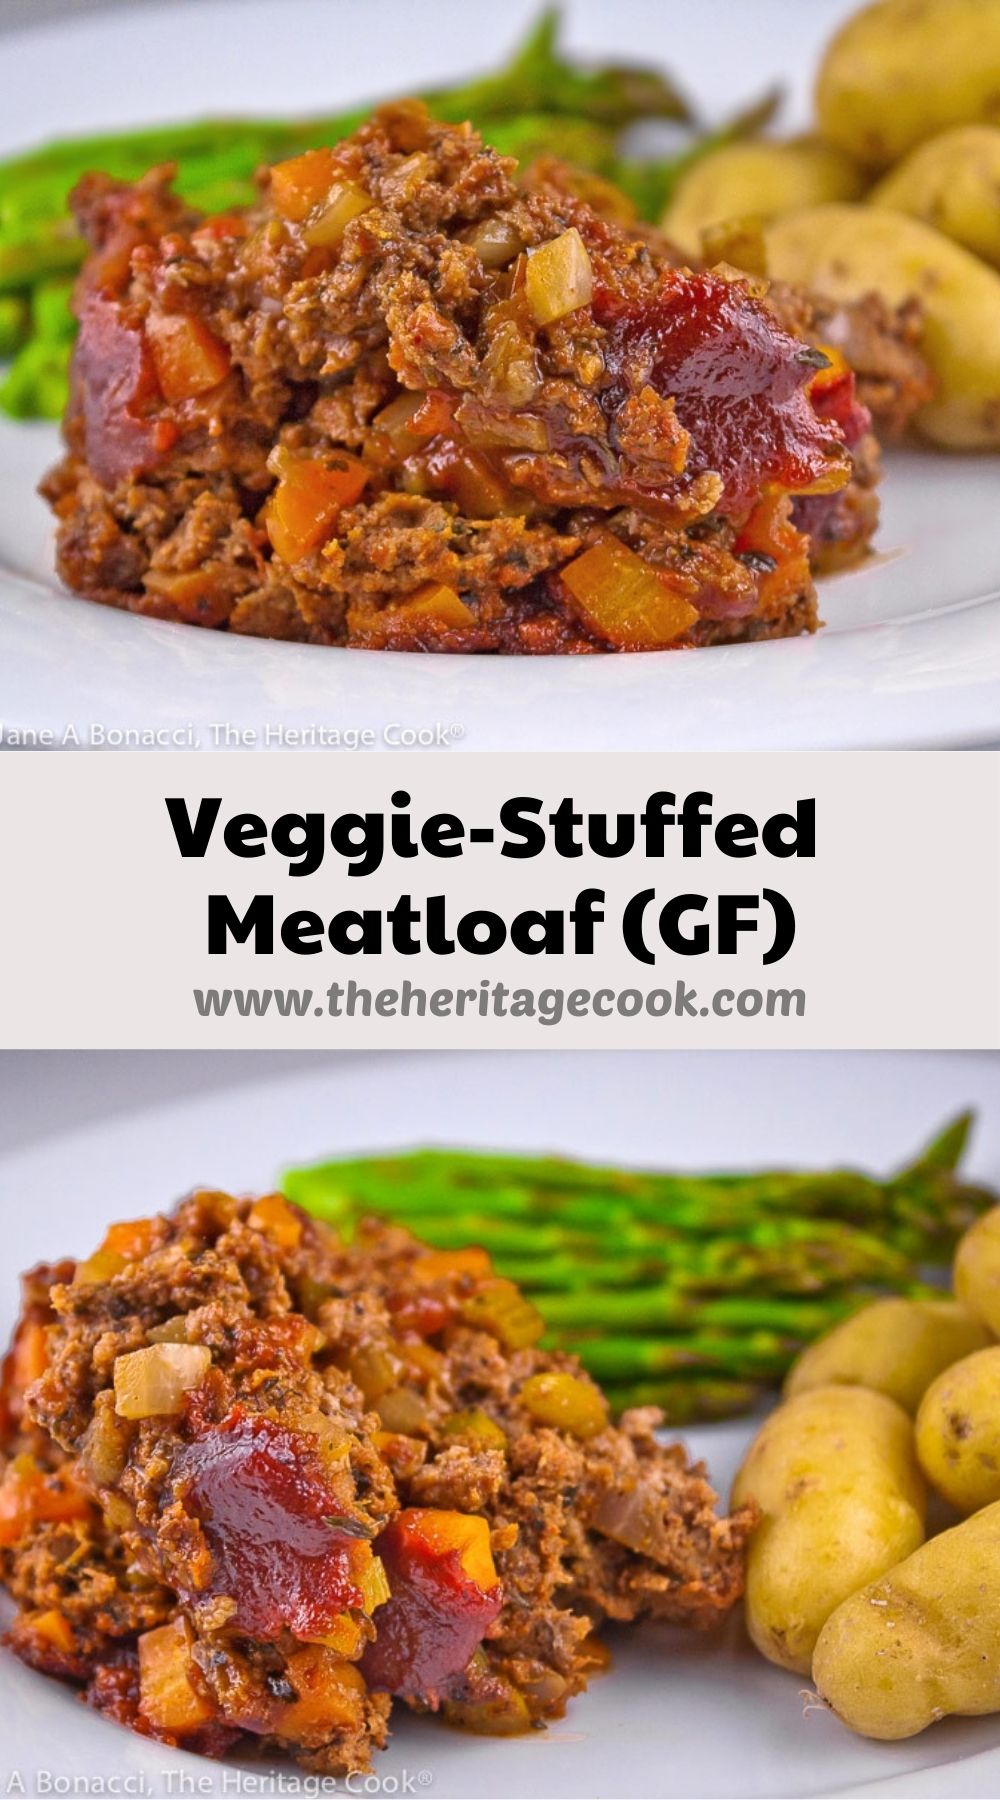 Vegetable-Stuffed Meatloaf (Gluten Free) © 2021 Jane Bonacci, The Heritage Cook